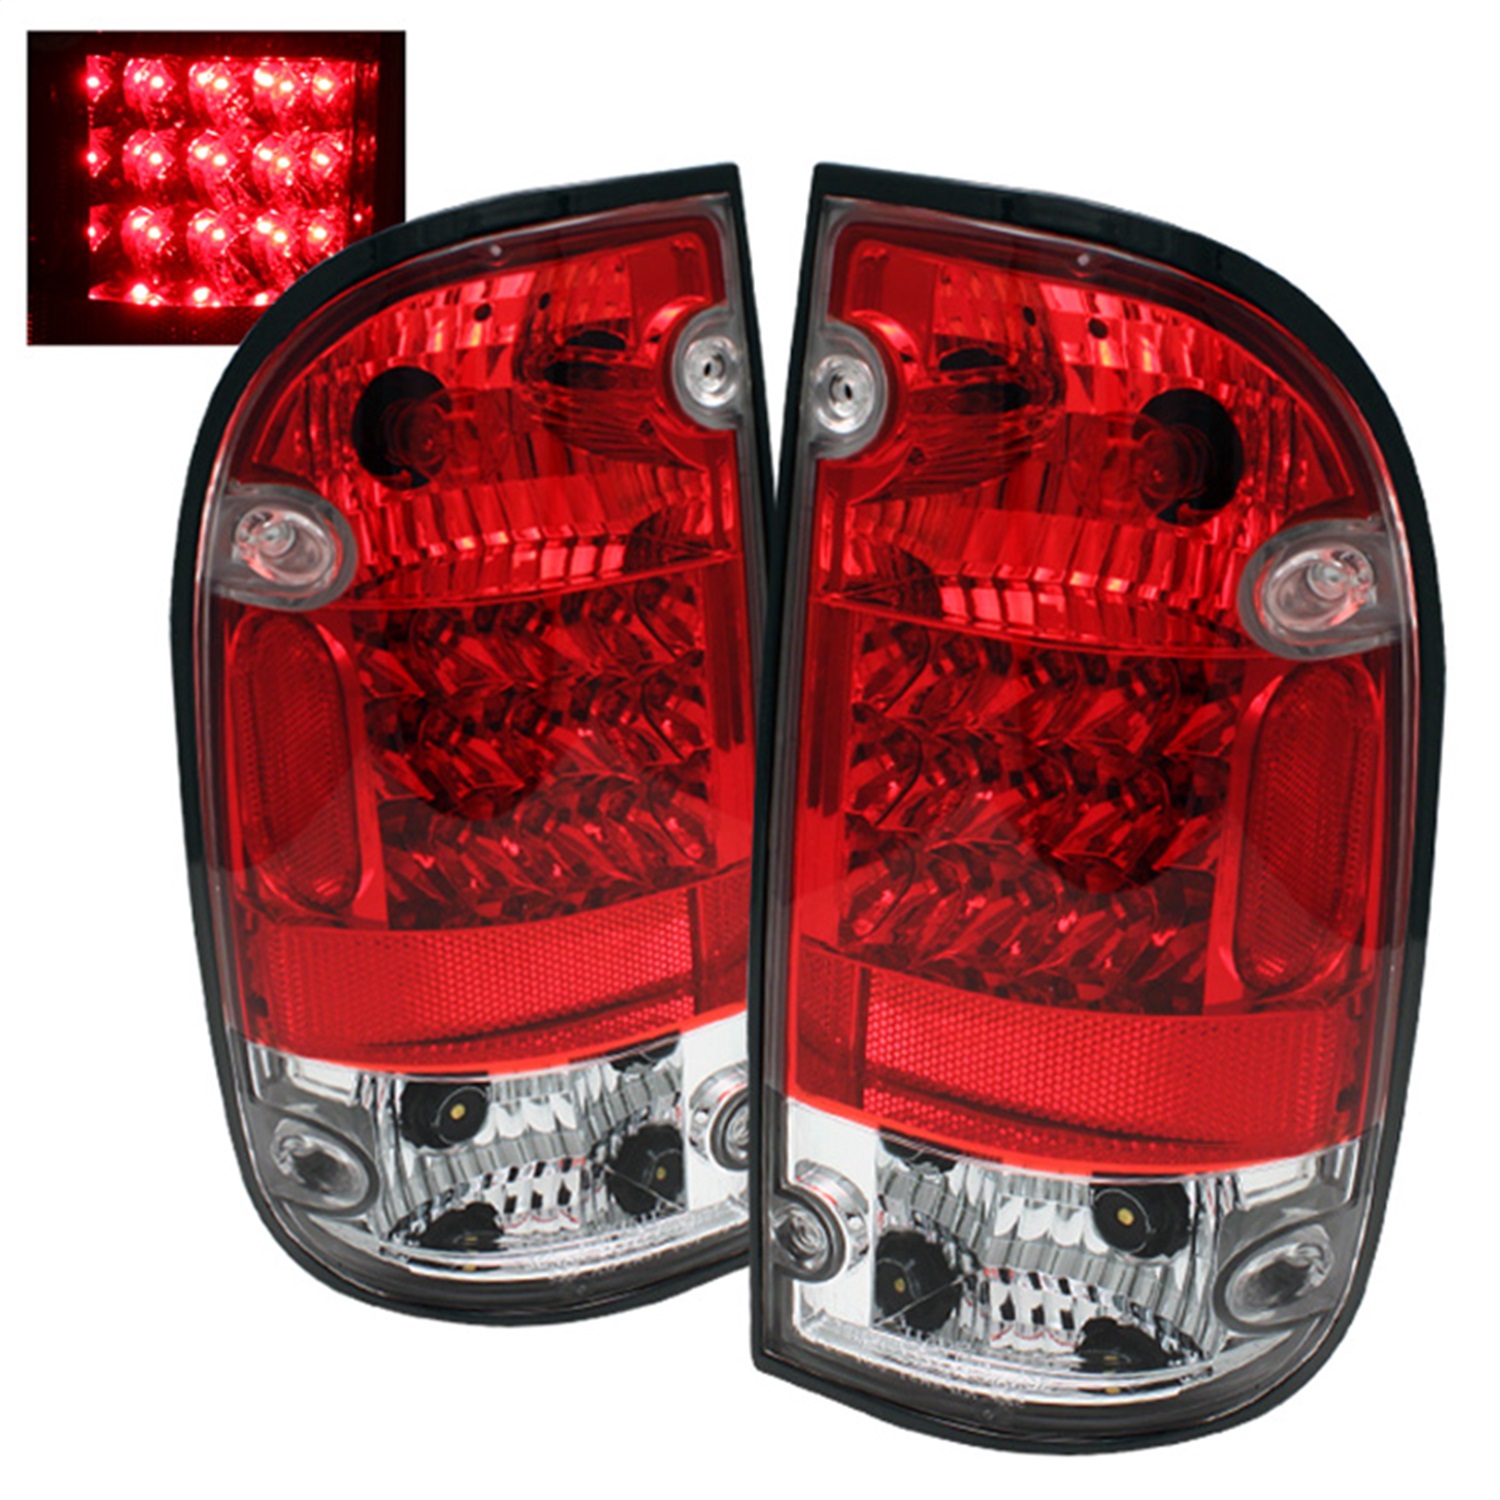 Spyder Auto 5007872 LED Tail Lights Fits 01-04 Tacoma